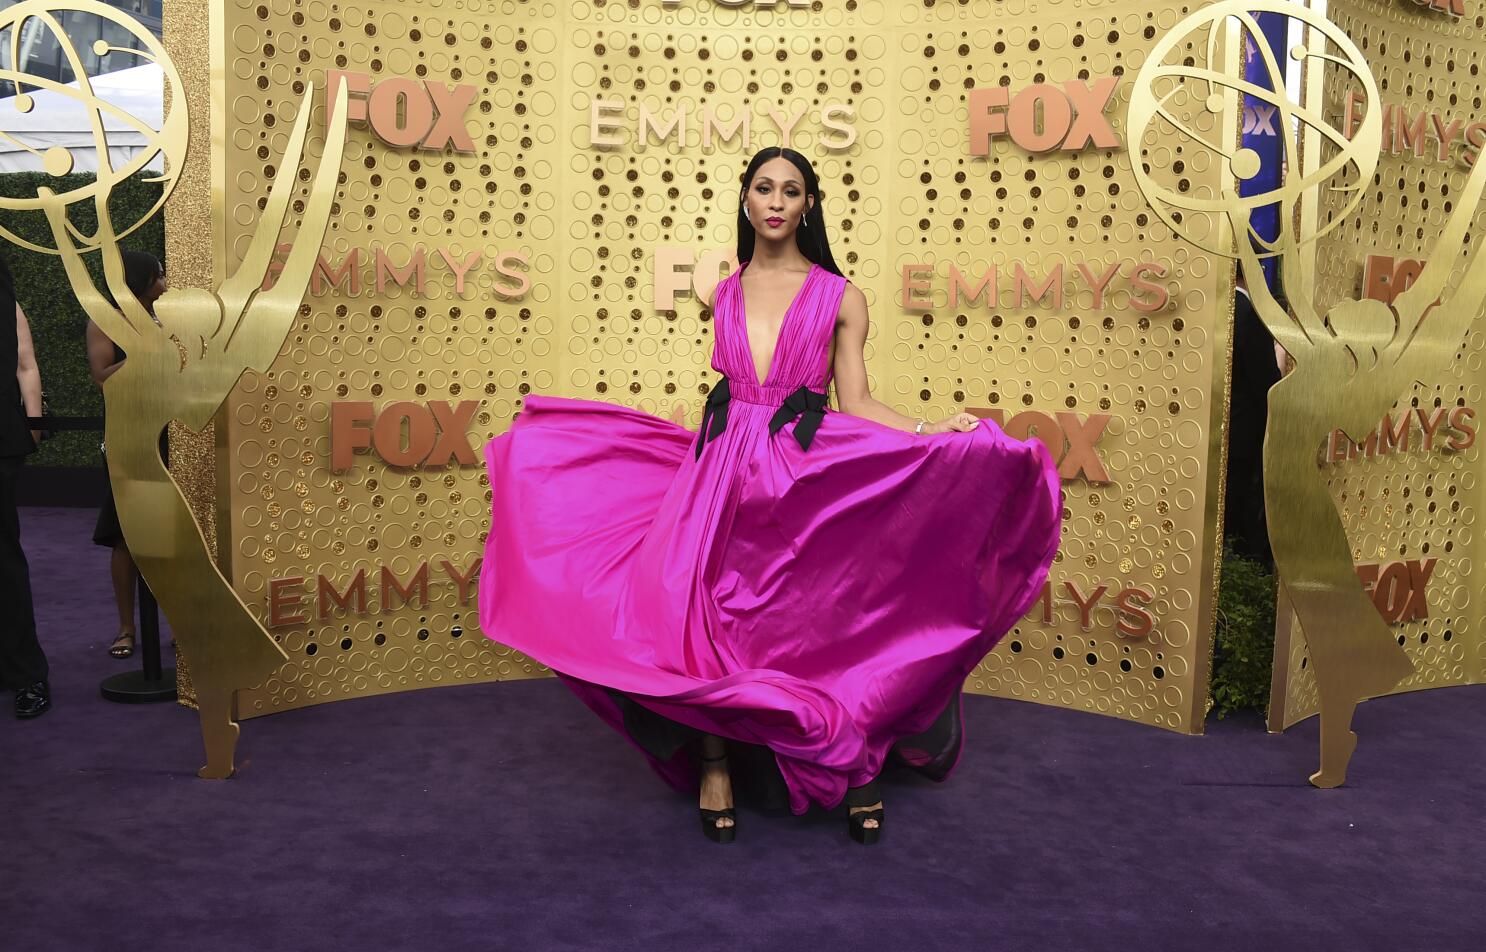 Sophie Turner's Louis Vuitton Emmys Dress Is Pink Satin